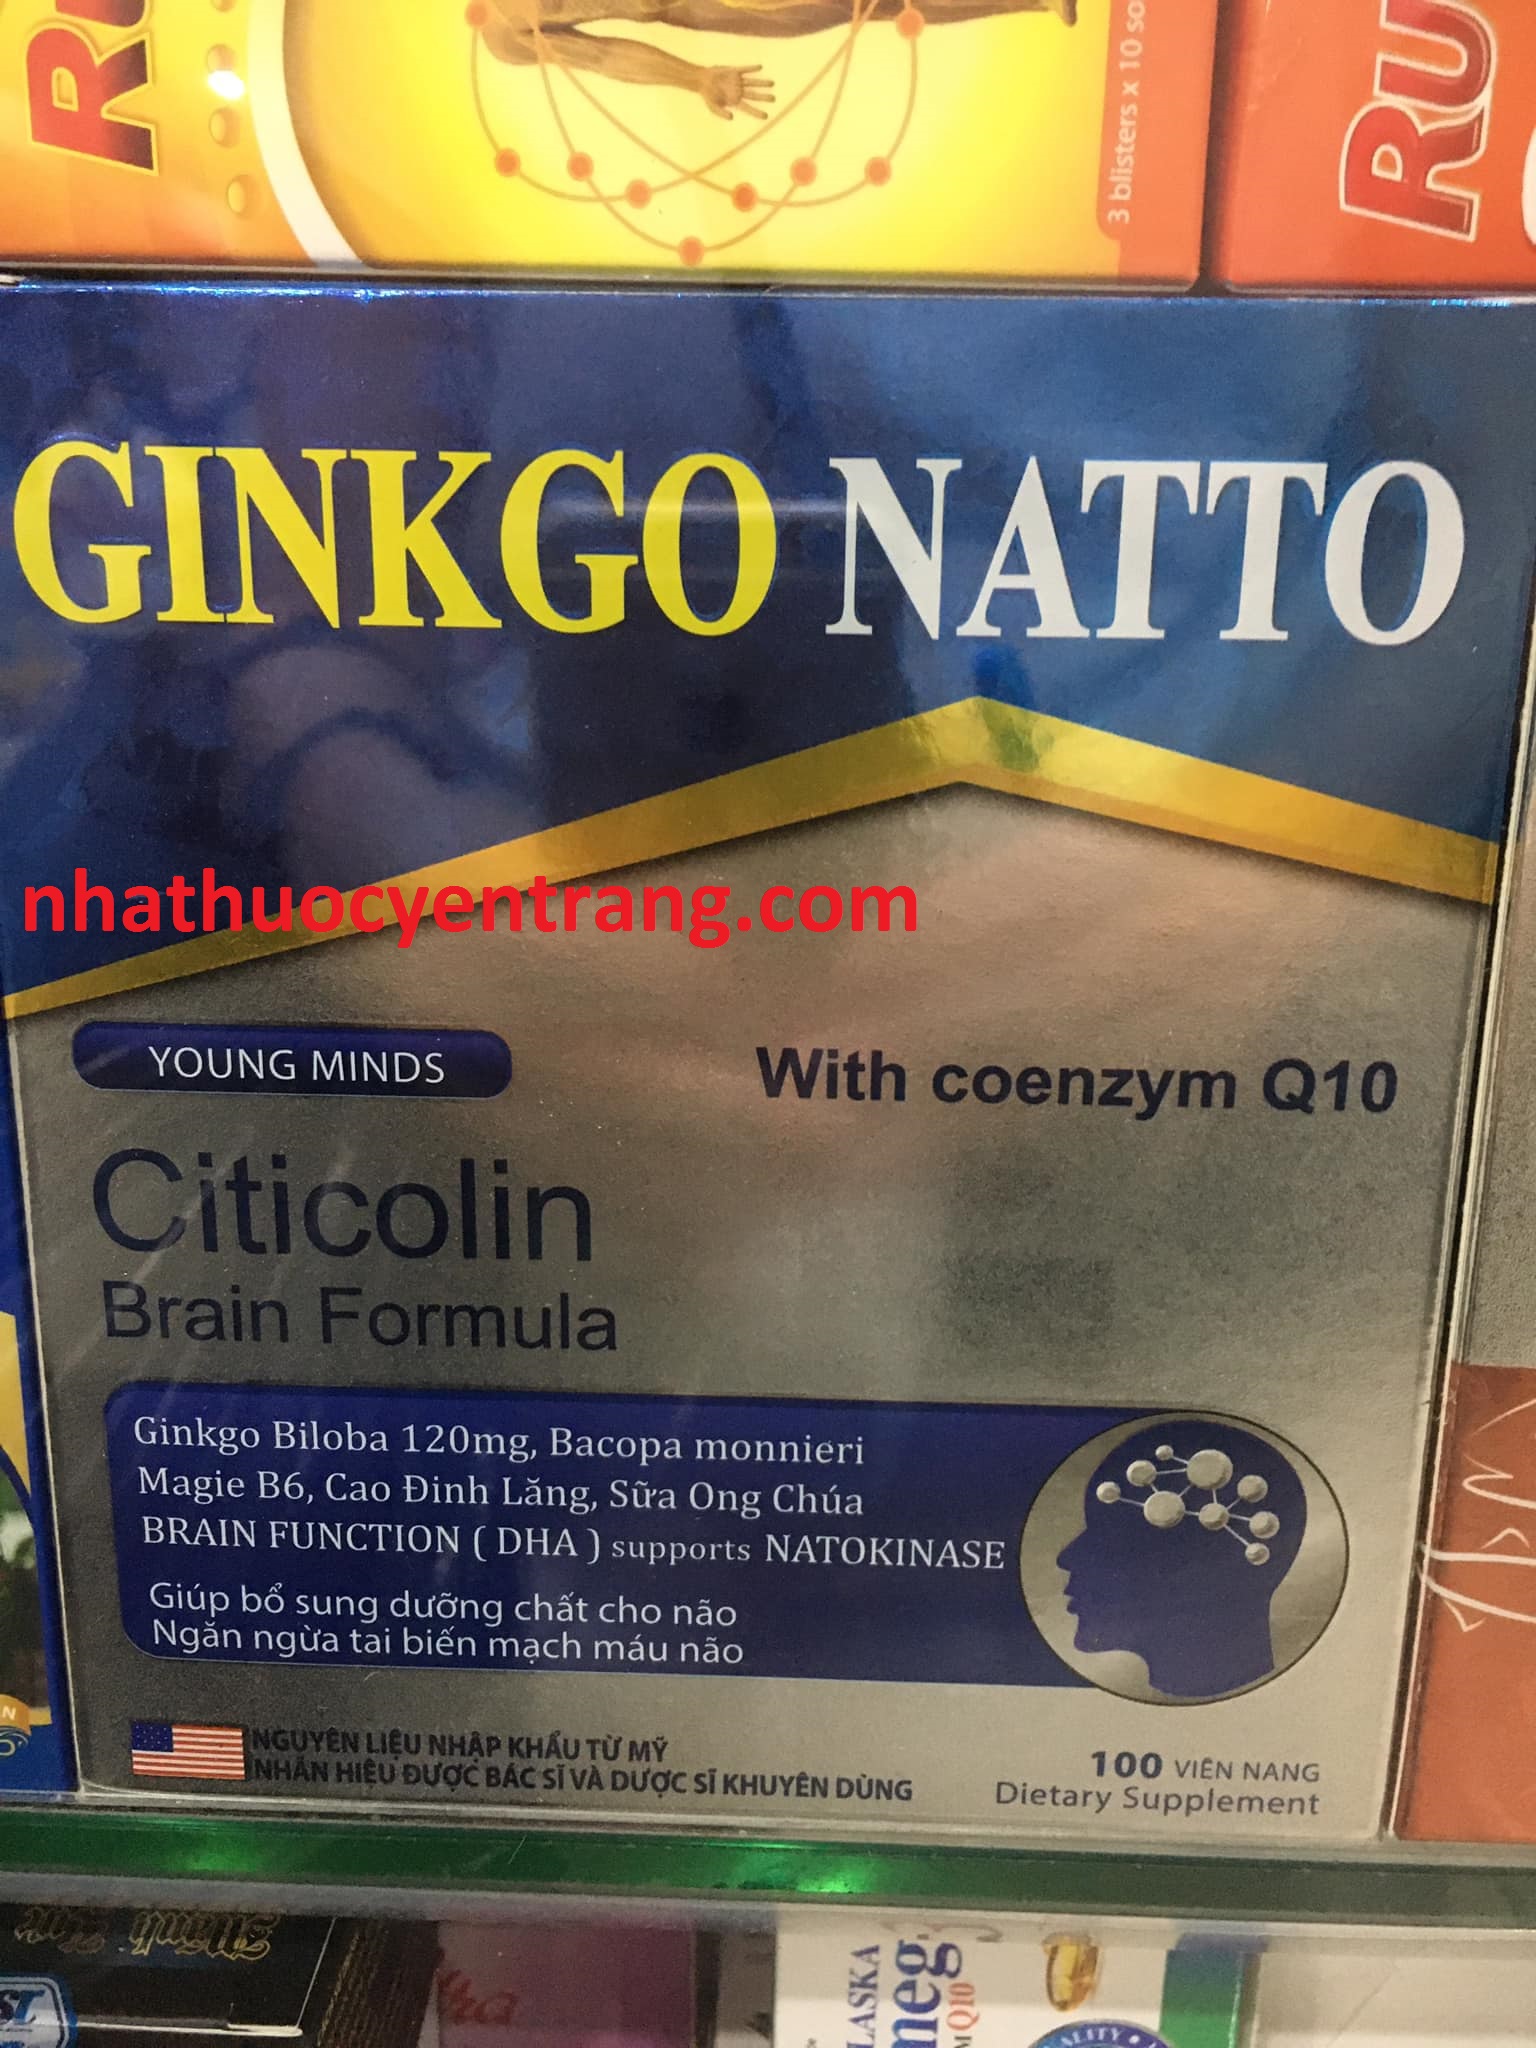 Ginkgo Natto